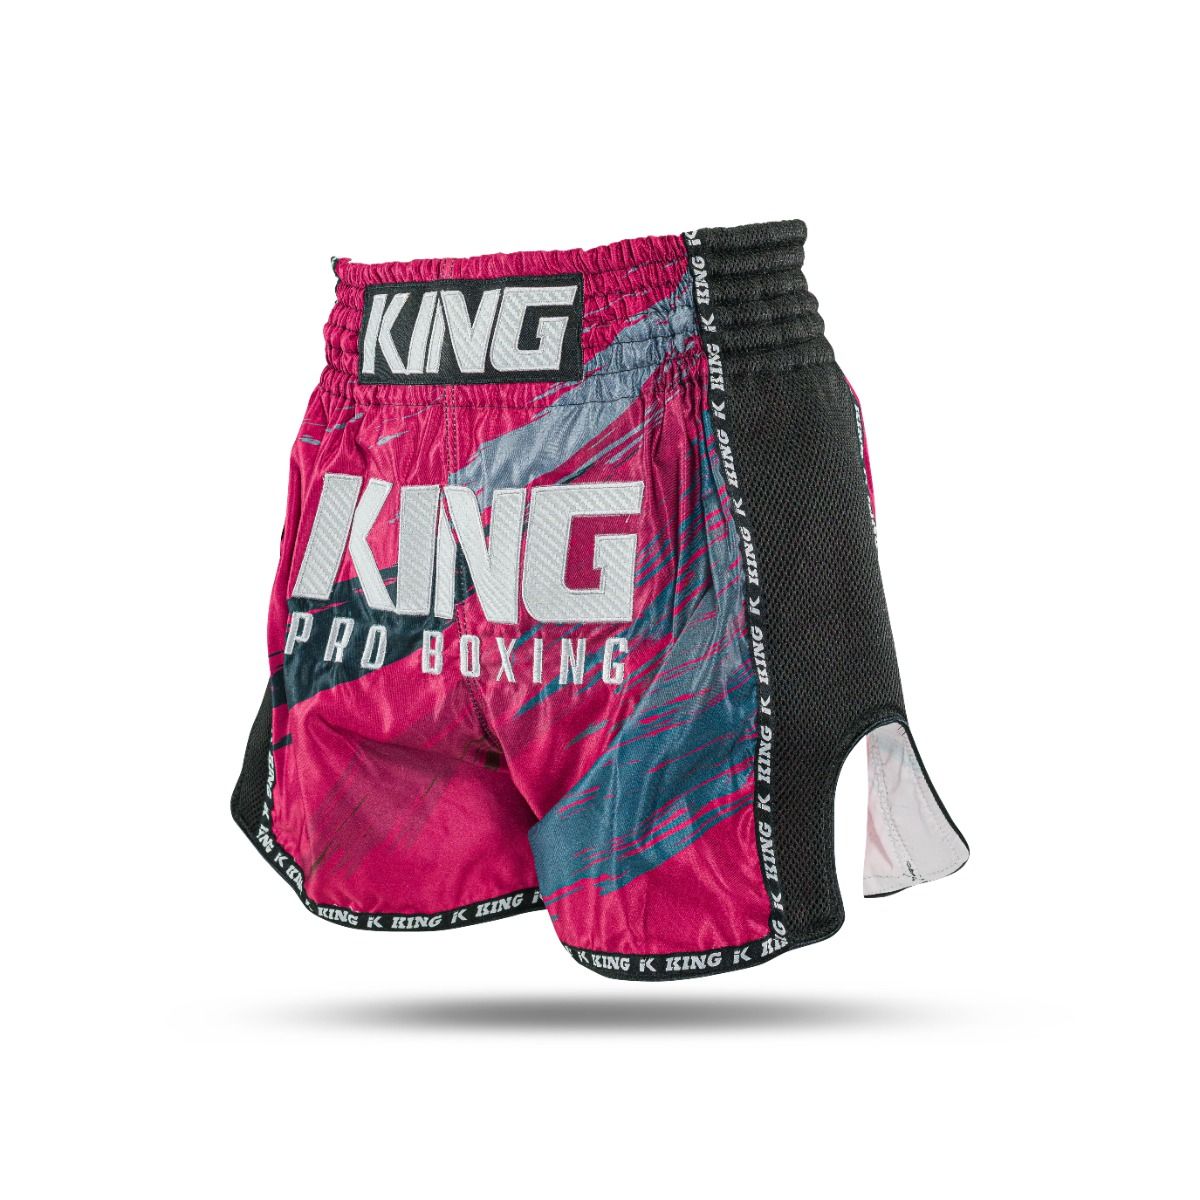 King PRO boxing muay Thai trunk - KPB STORM 3